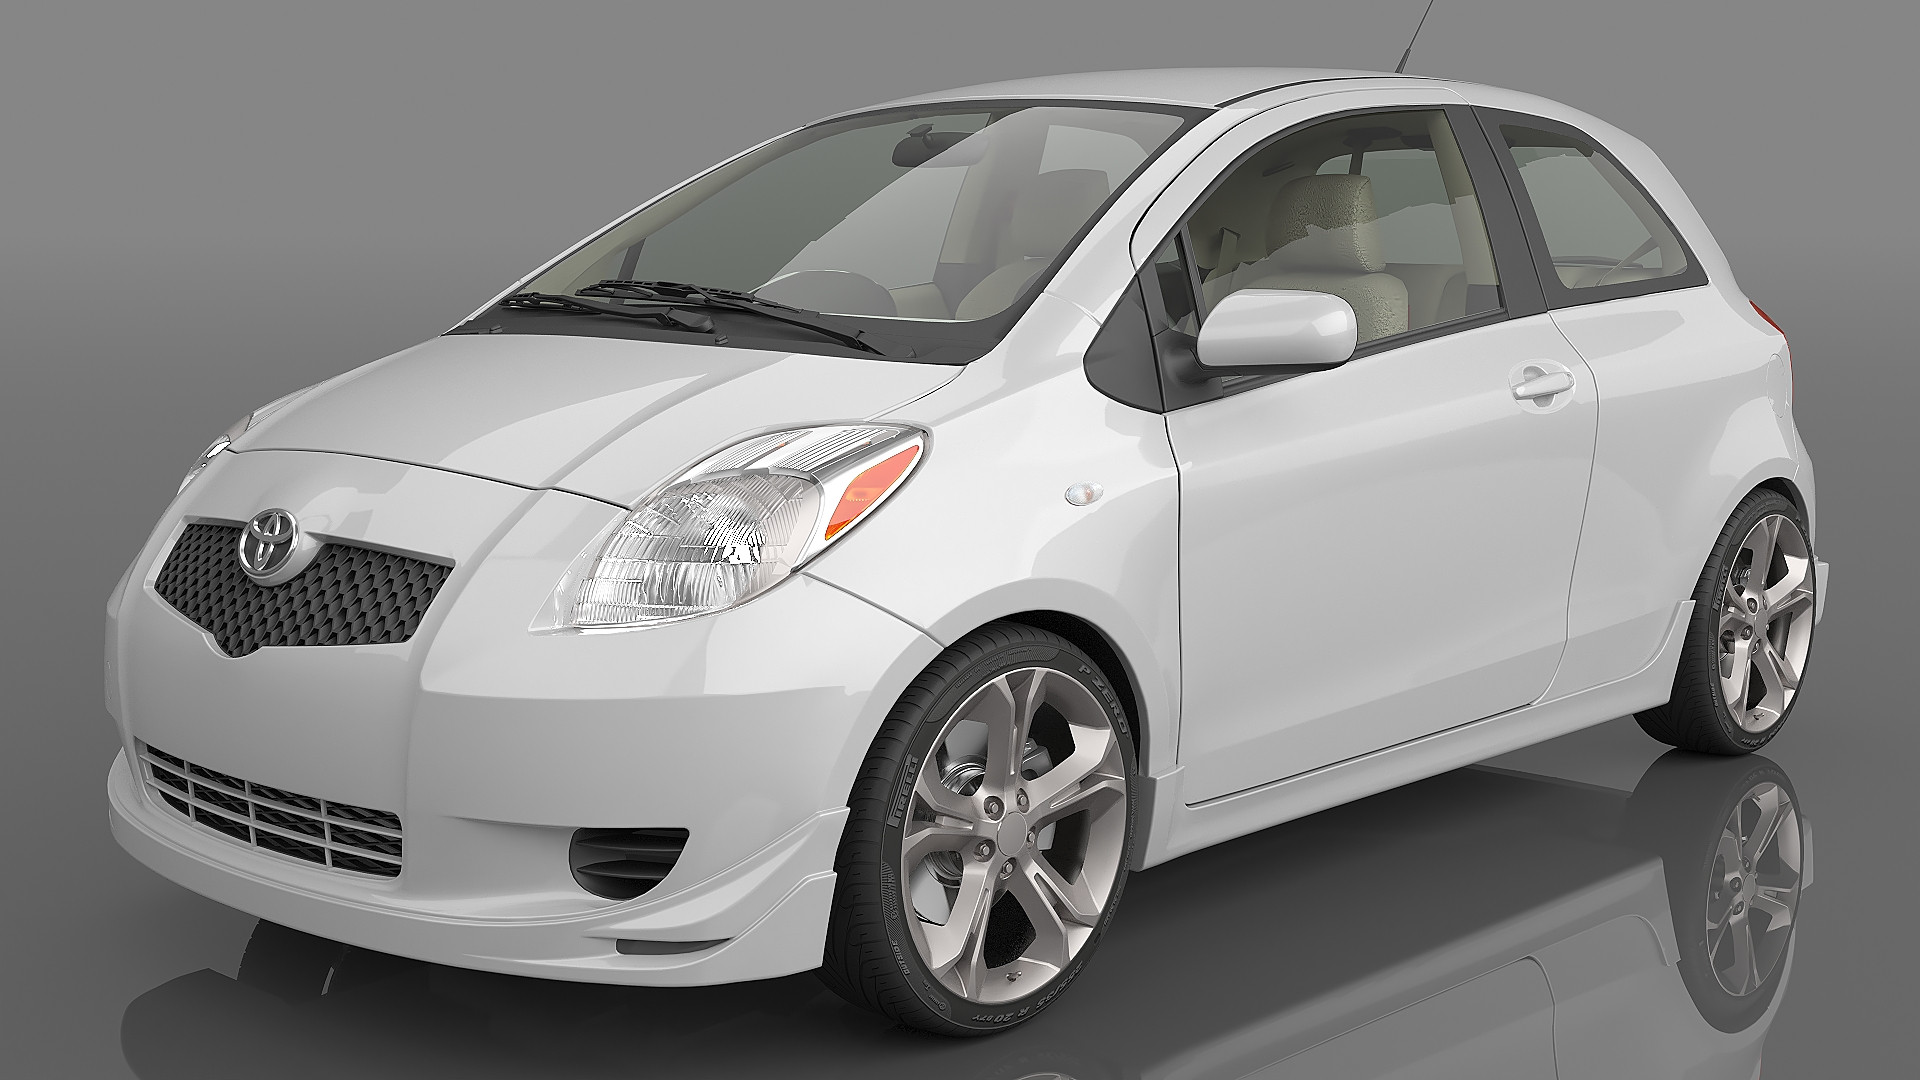 2008 Toyota Yaris S IE - 3D Model by msasdt